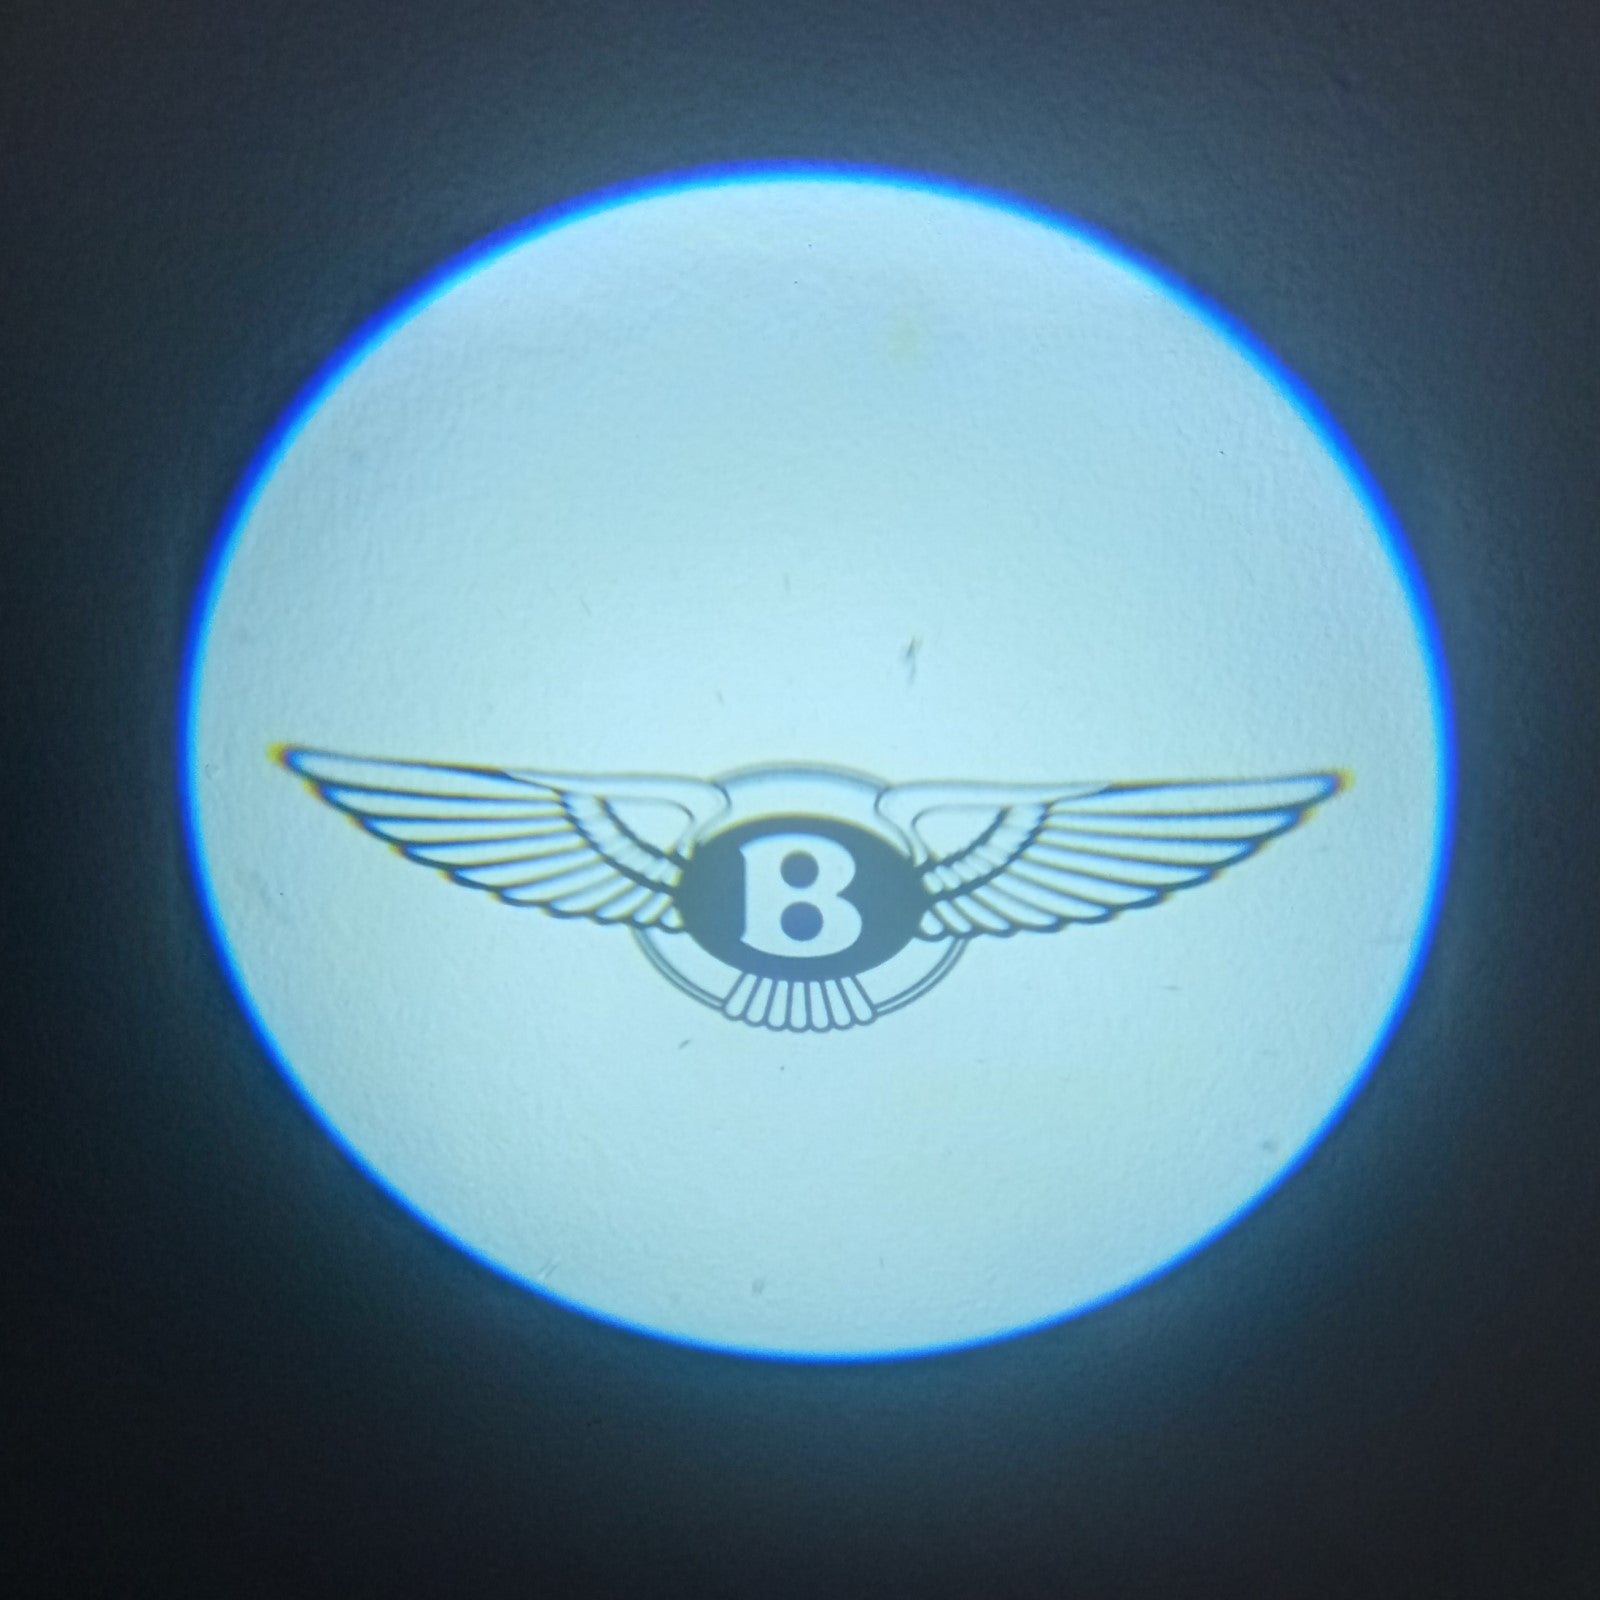 Luzes Cortesia com Logotipo marca Bentley